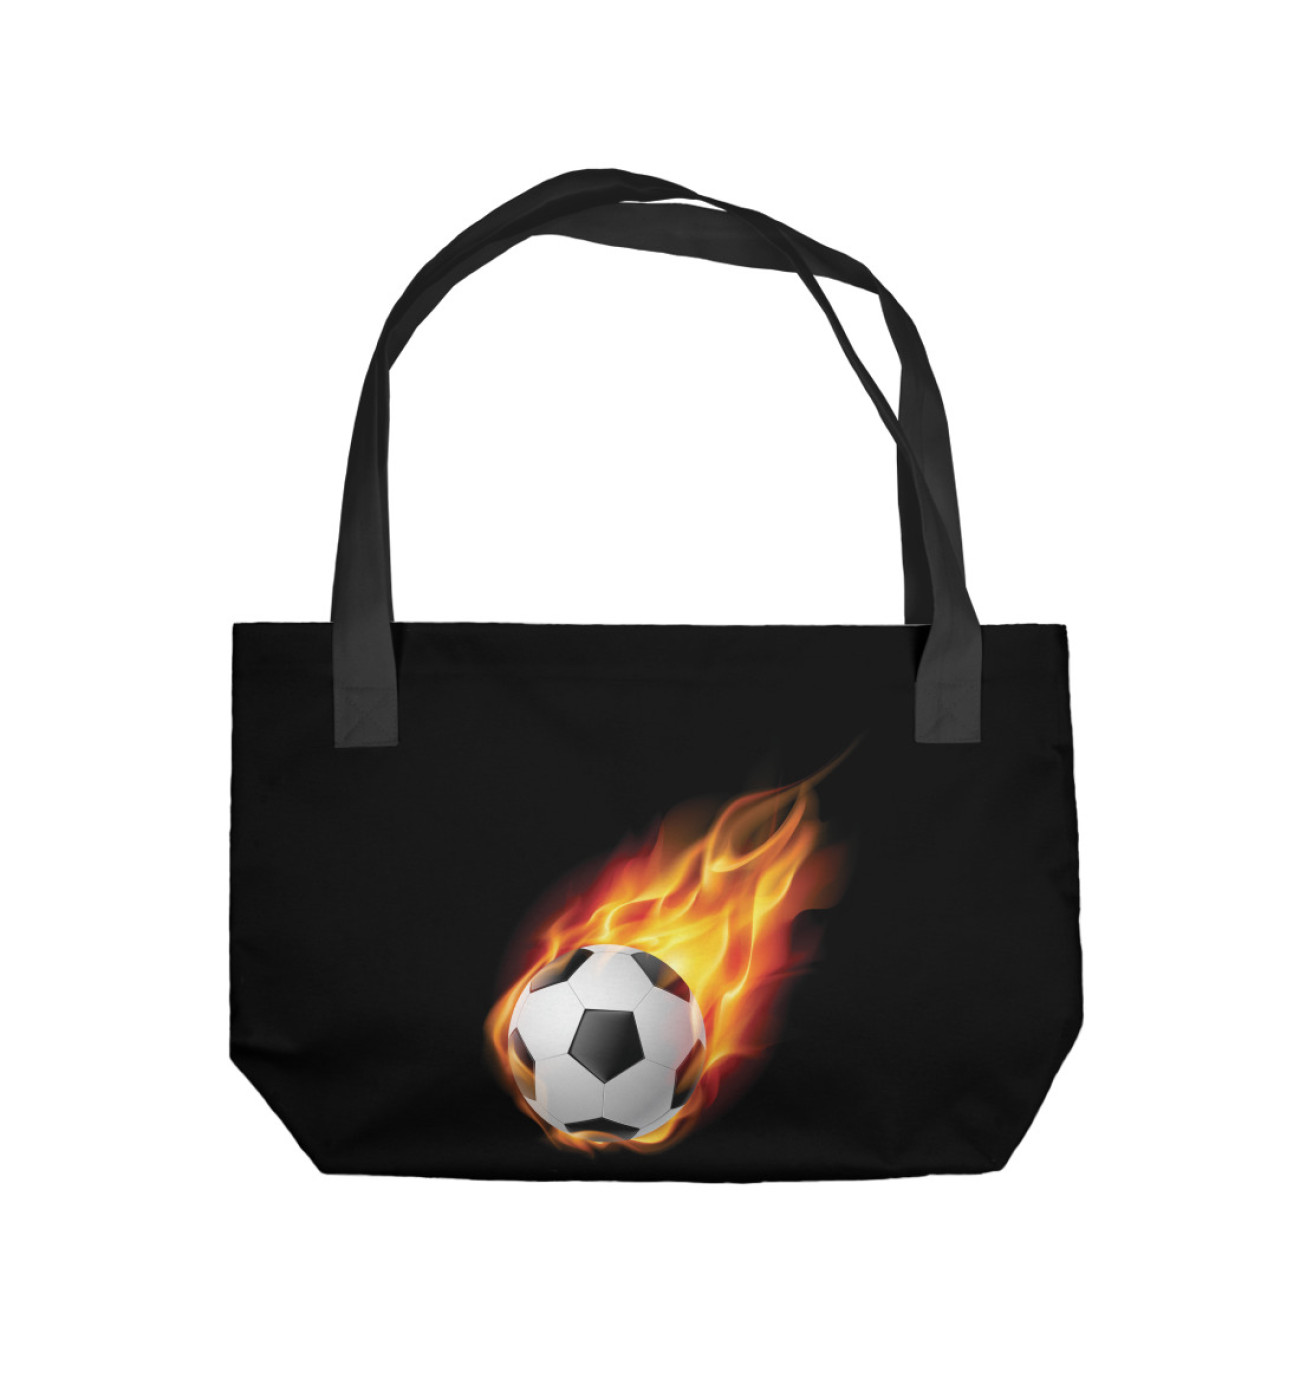 Пляжная сумка Огненный мяч, артикул: FTO-427023-sup